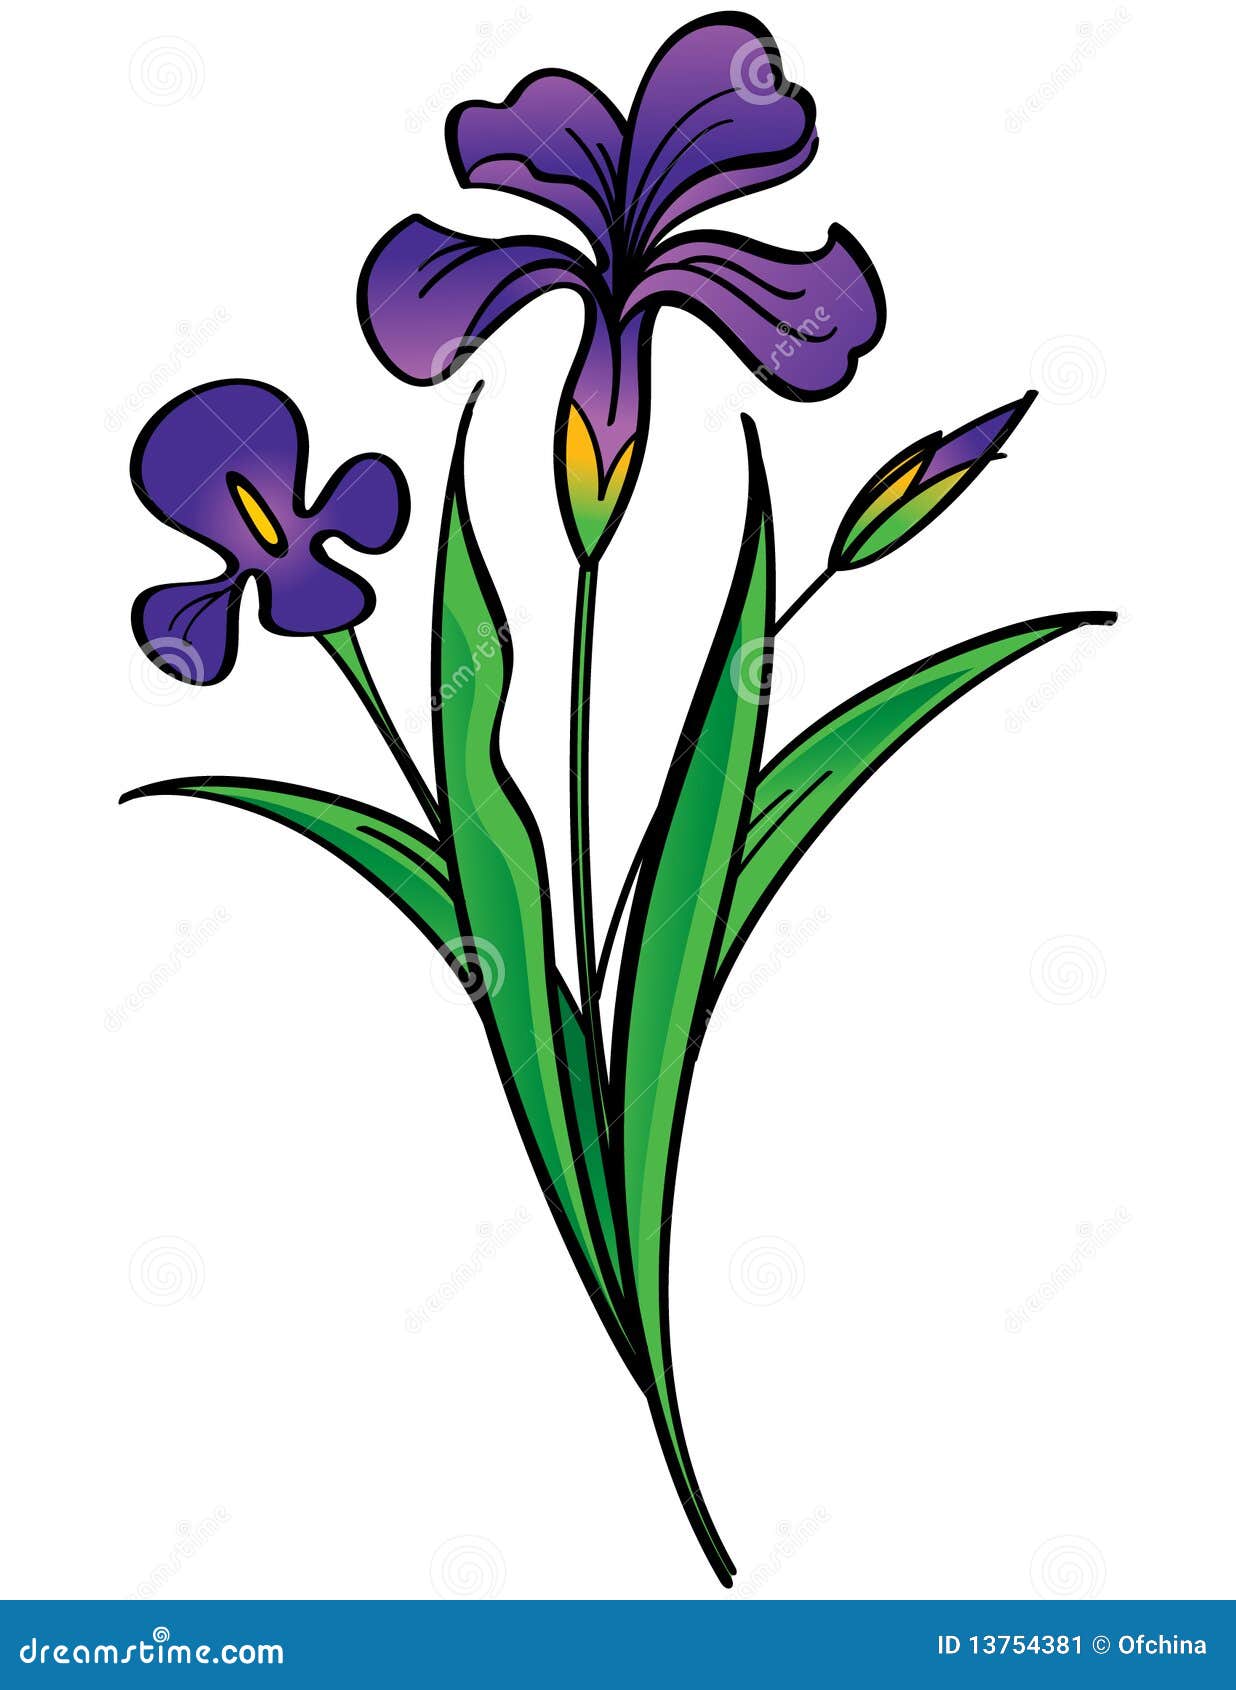 Iris - beautiful flowers stock vector. Illustration of design - 13754381